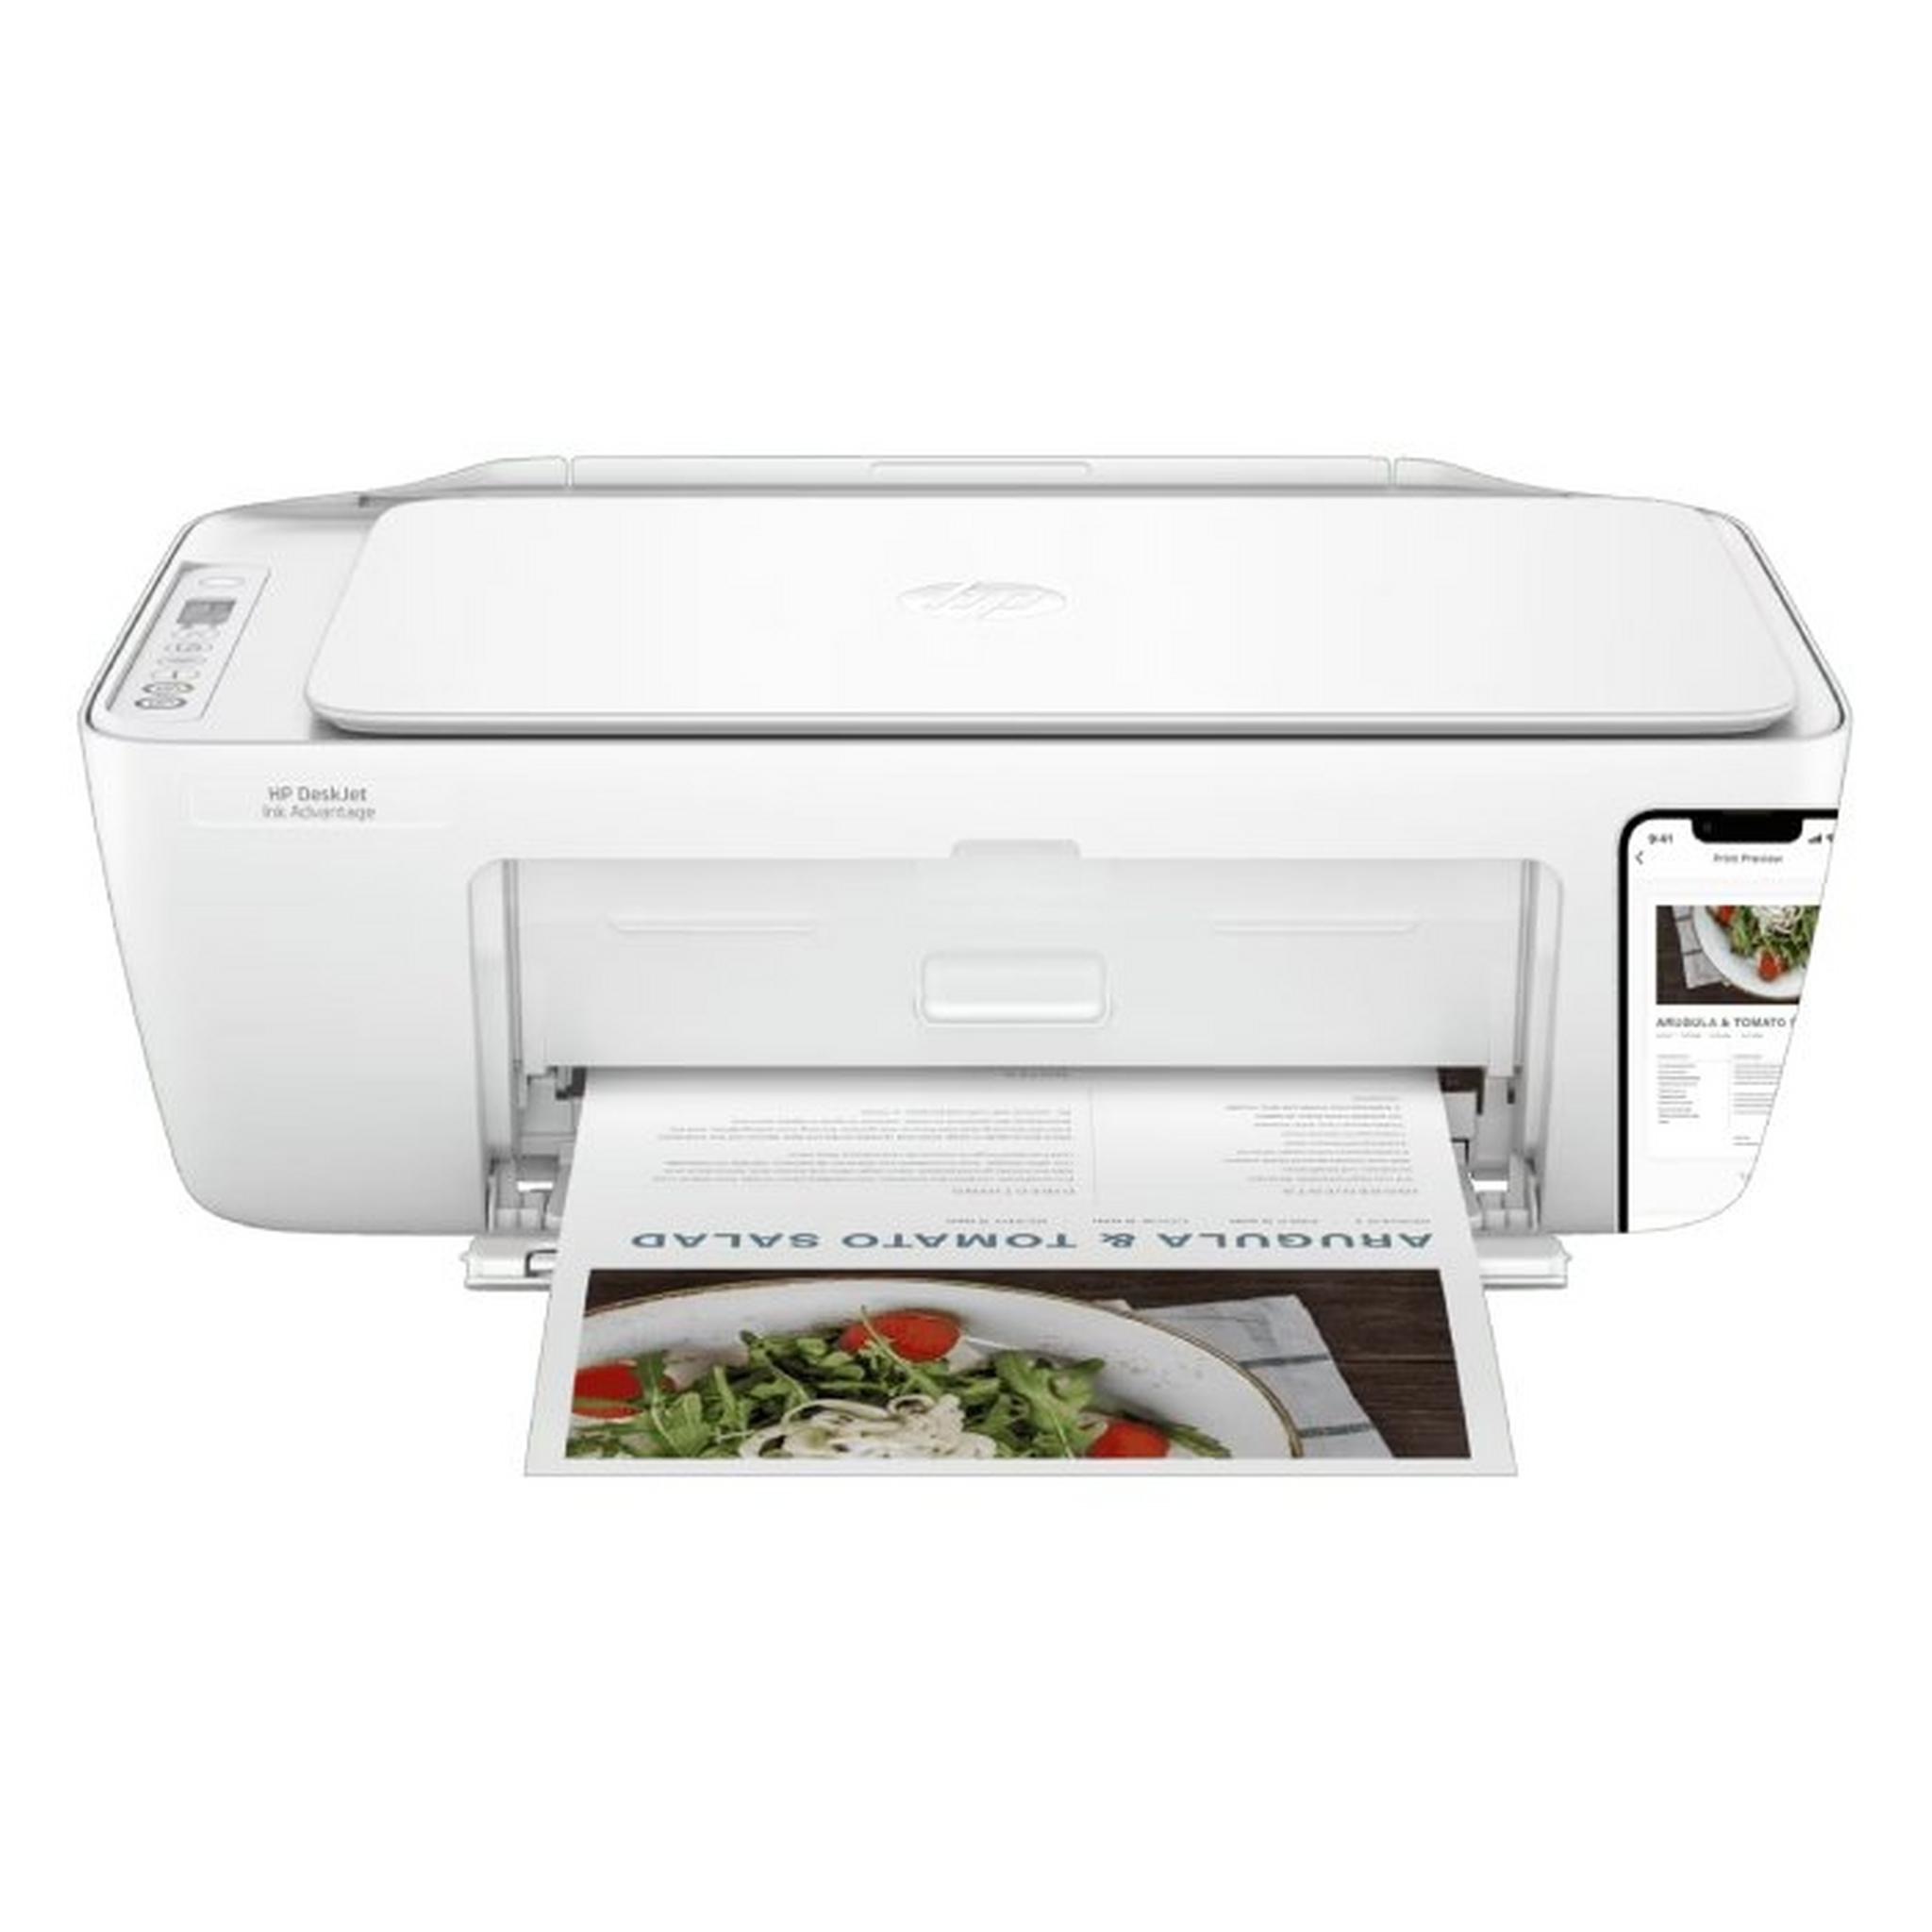 HP DeskJet Ink Advantage 2875 All-in-One Printer, 2875 – White